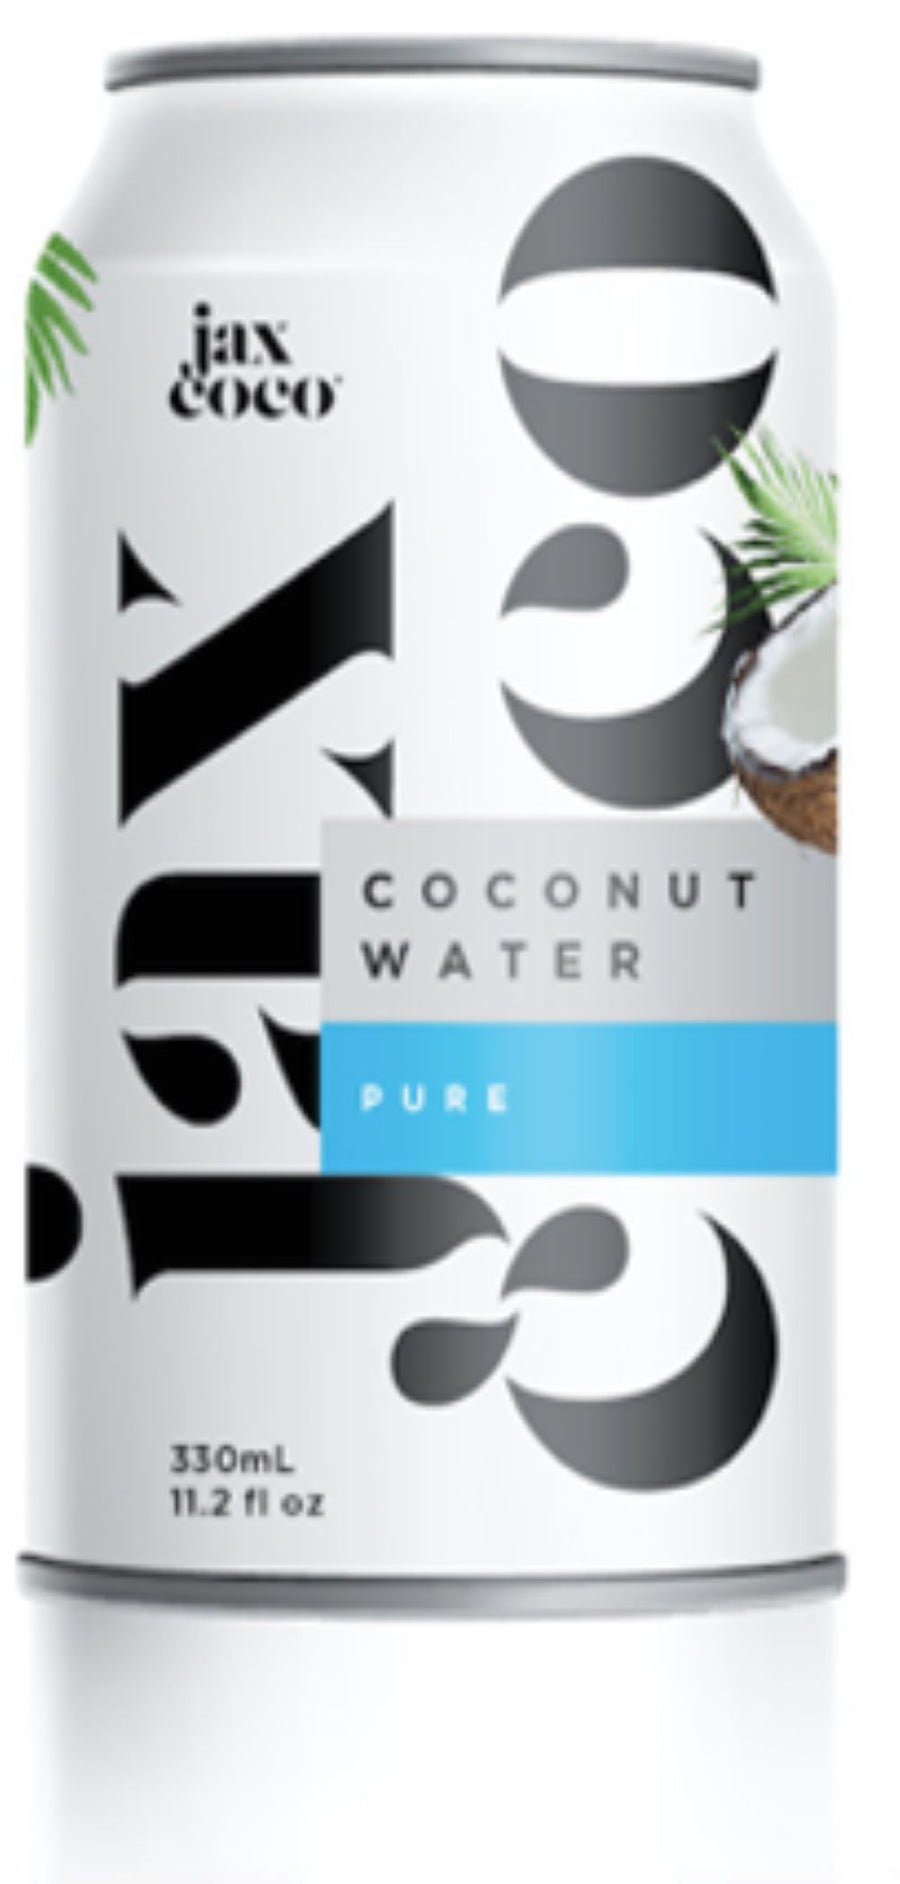 Jax Coco Coconut Water Can 330ml